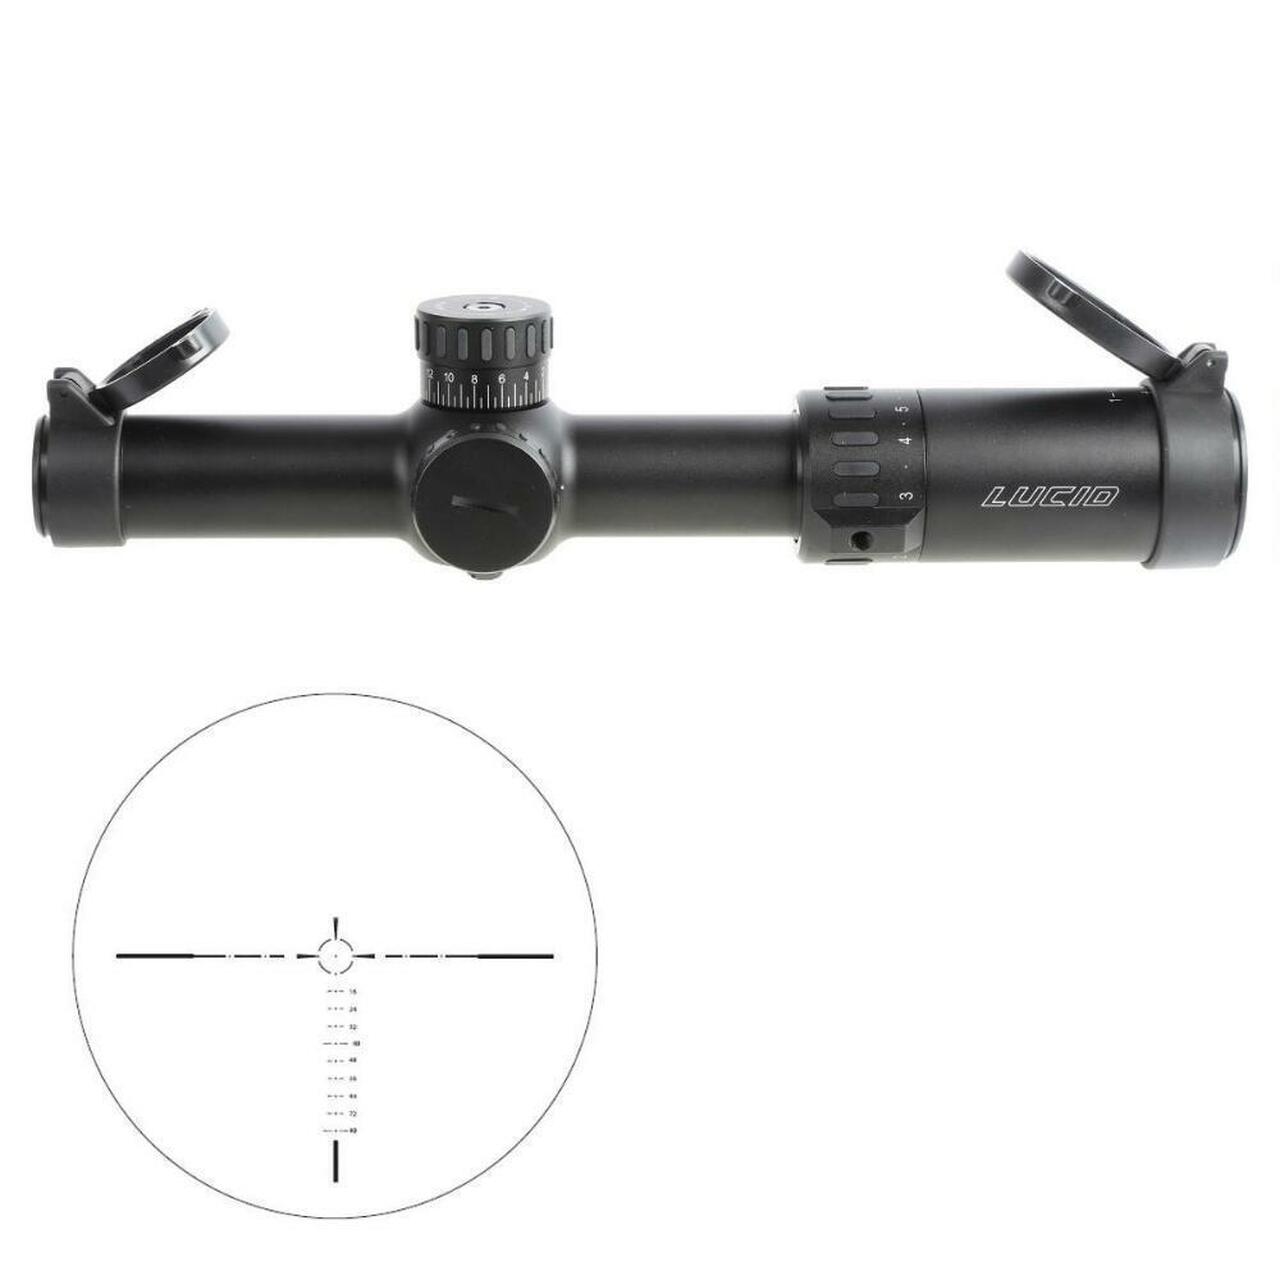 scopes-lucid-optics-l7-rifle-scope-1-6x-24-p7-etched-glass-reticle-matte-black-cobratac-sku-85...jpg